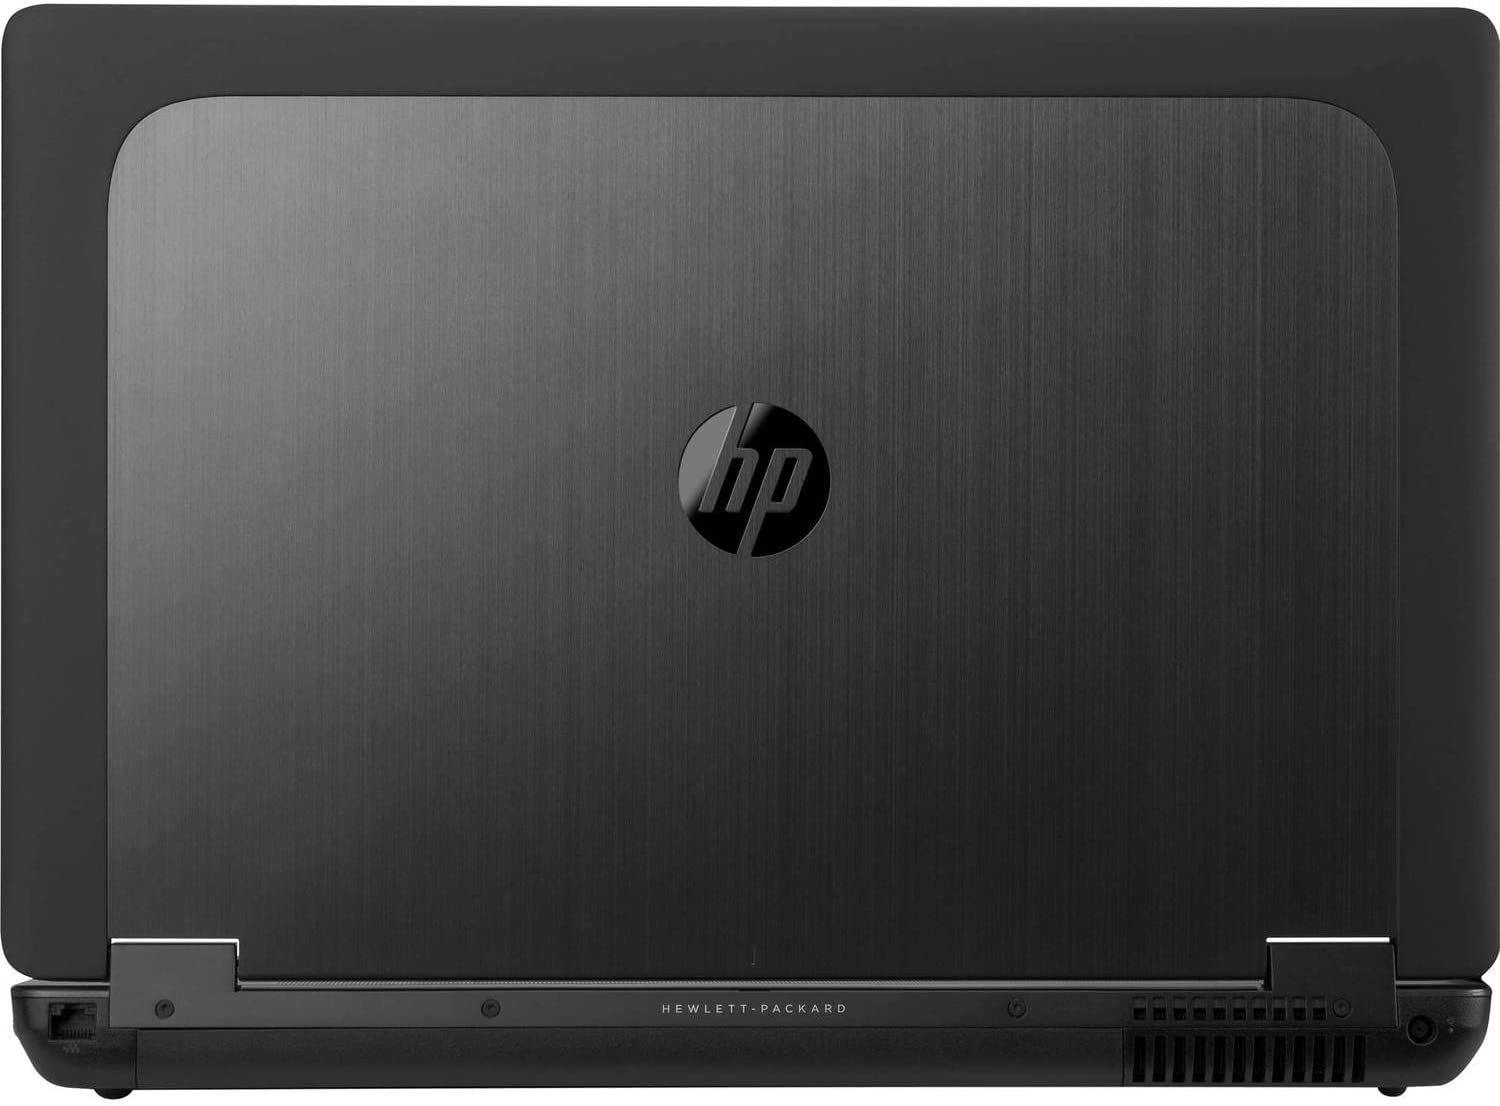 HP Probook 17 G2 Core i7-4710MQ 2.50 GHZ , 17.3 inches hd display windows 10 Pro (Renewed)